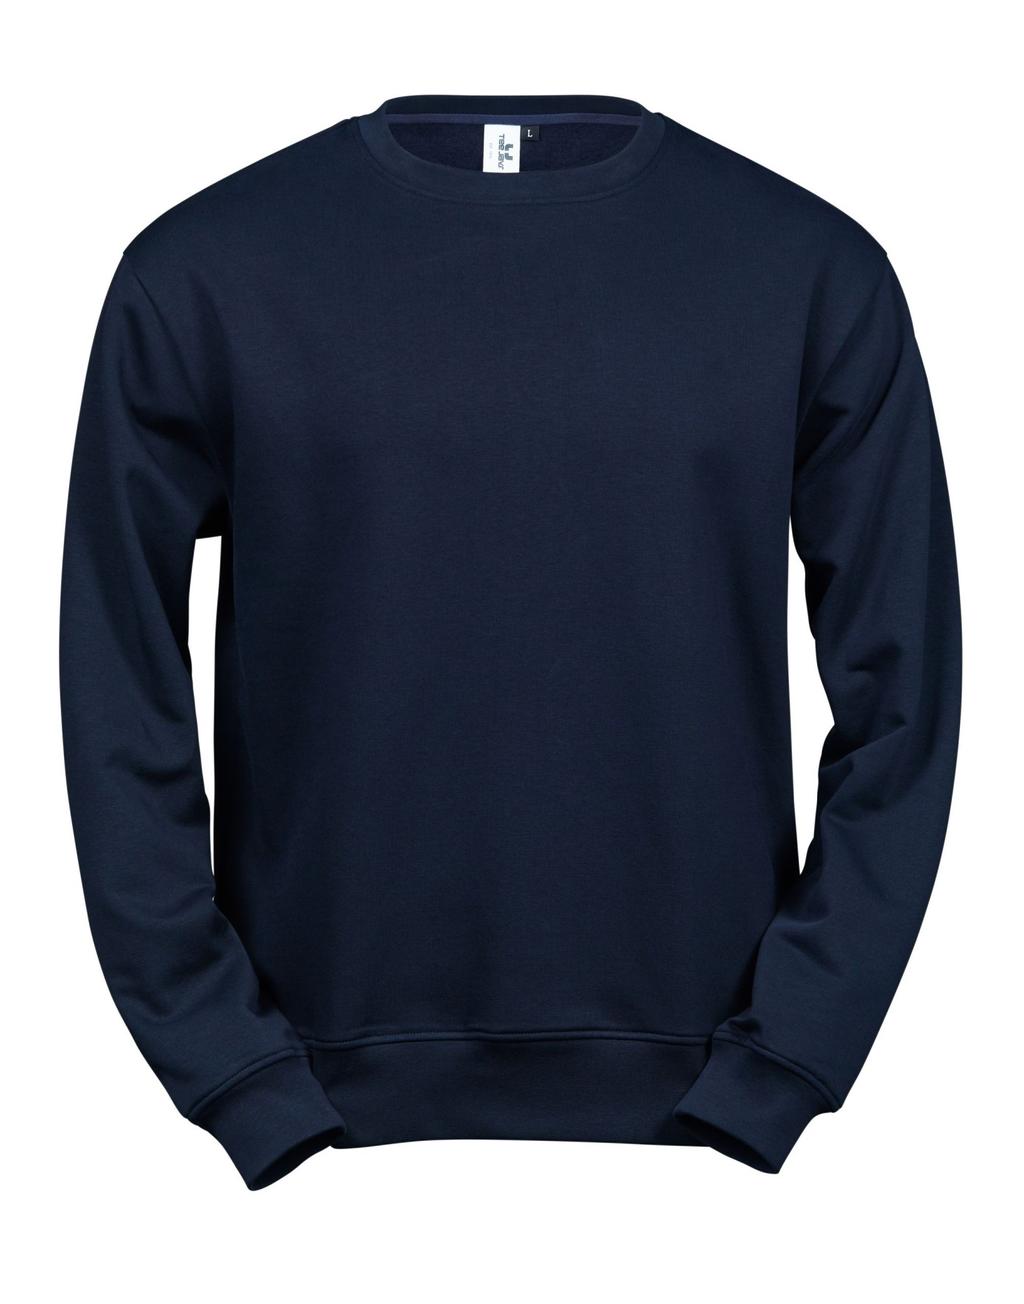  Power Sweatshirt in Farbe Navy